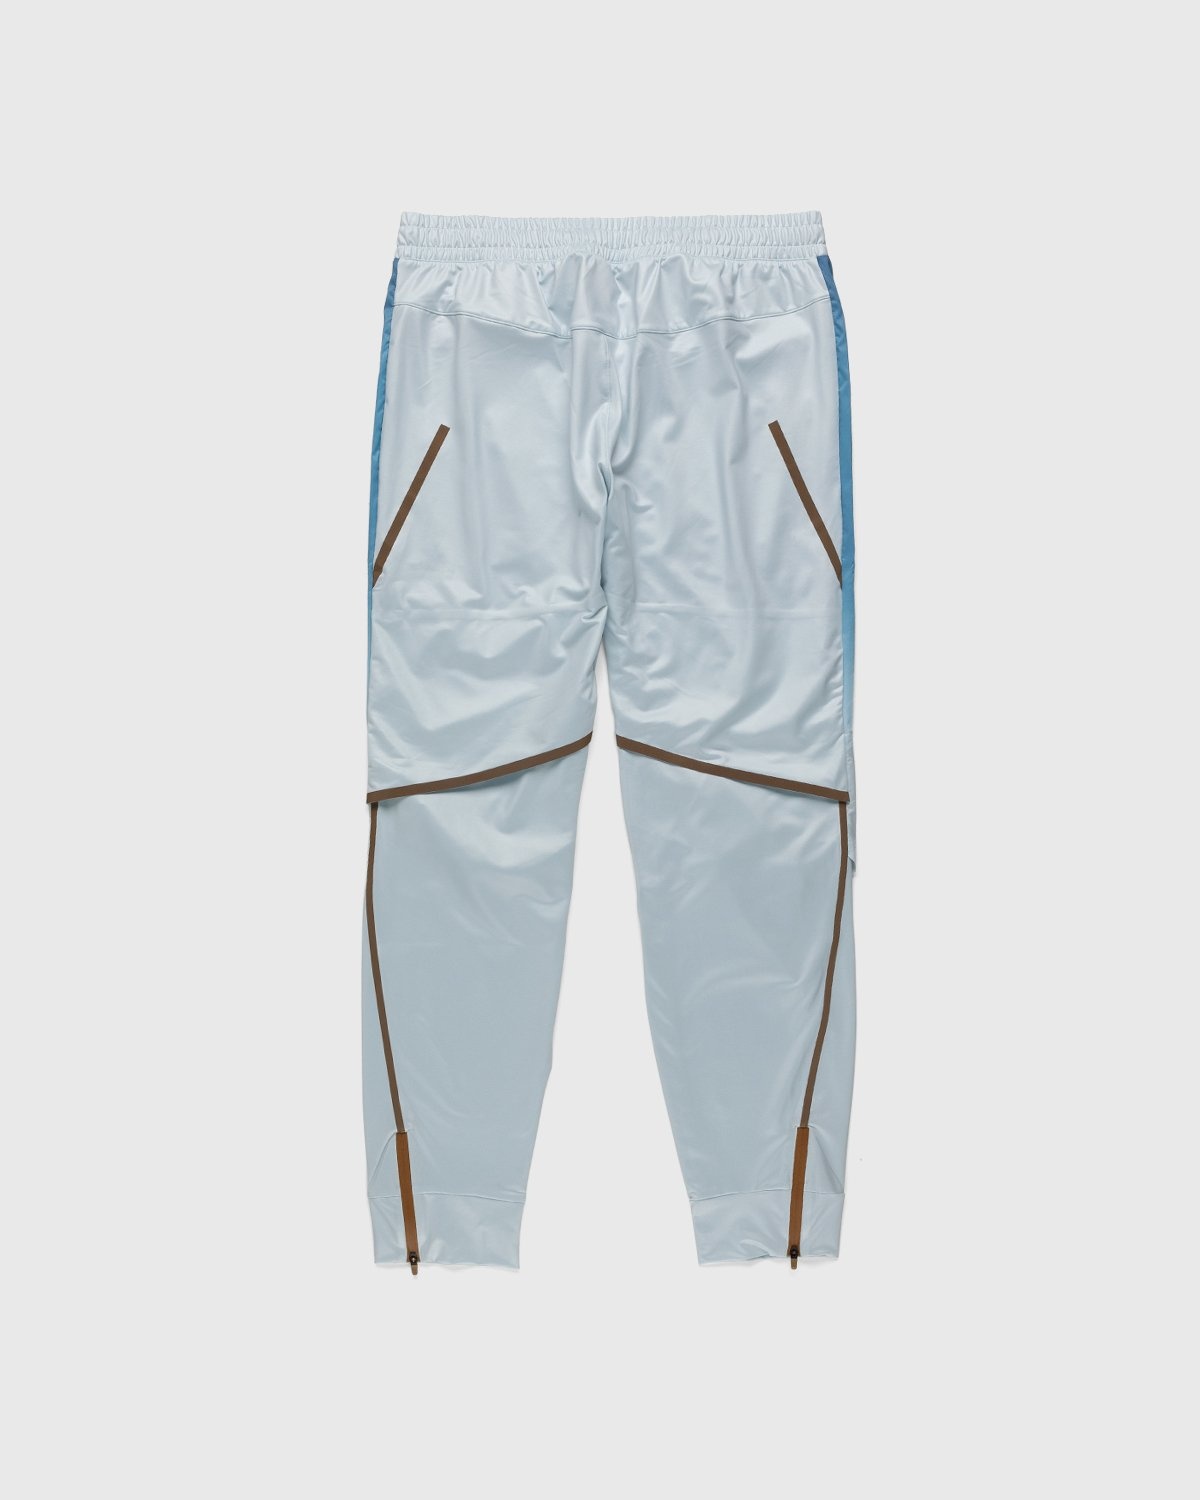 Loewe x On – Men's Technical Running Pants Gradient Grey - Active Pants - Blue - Image 2